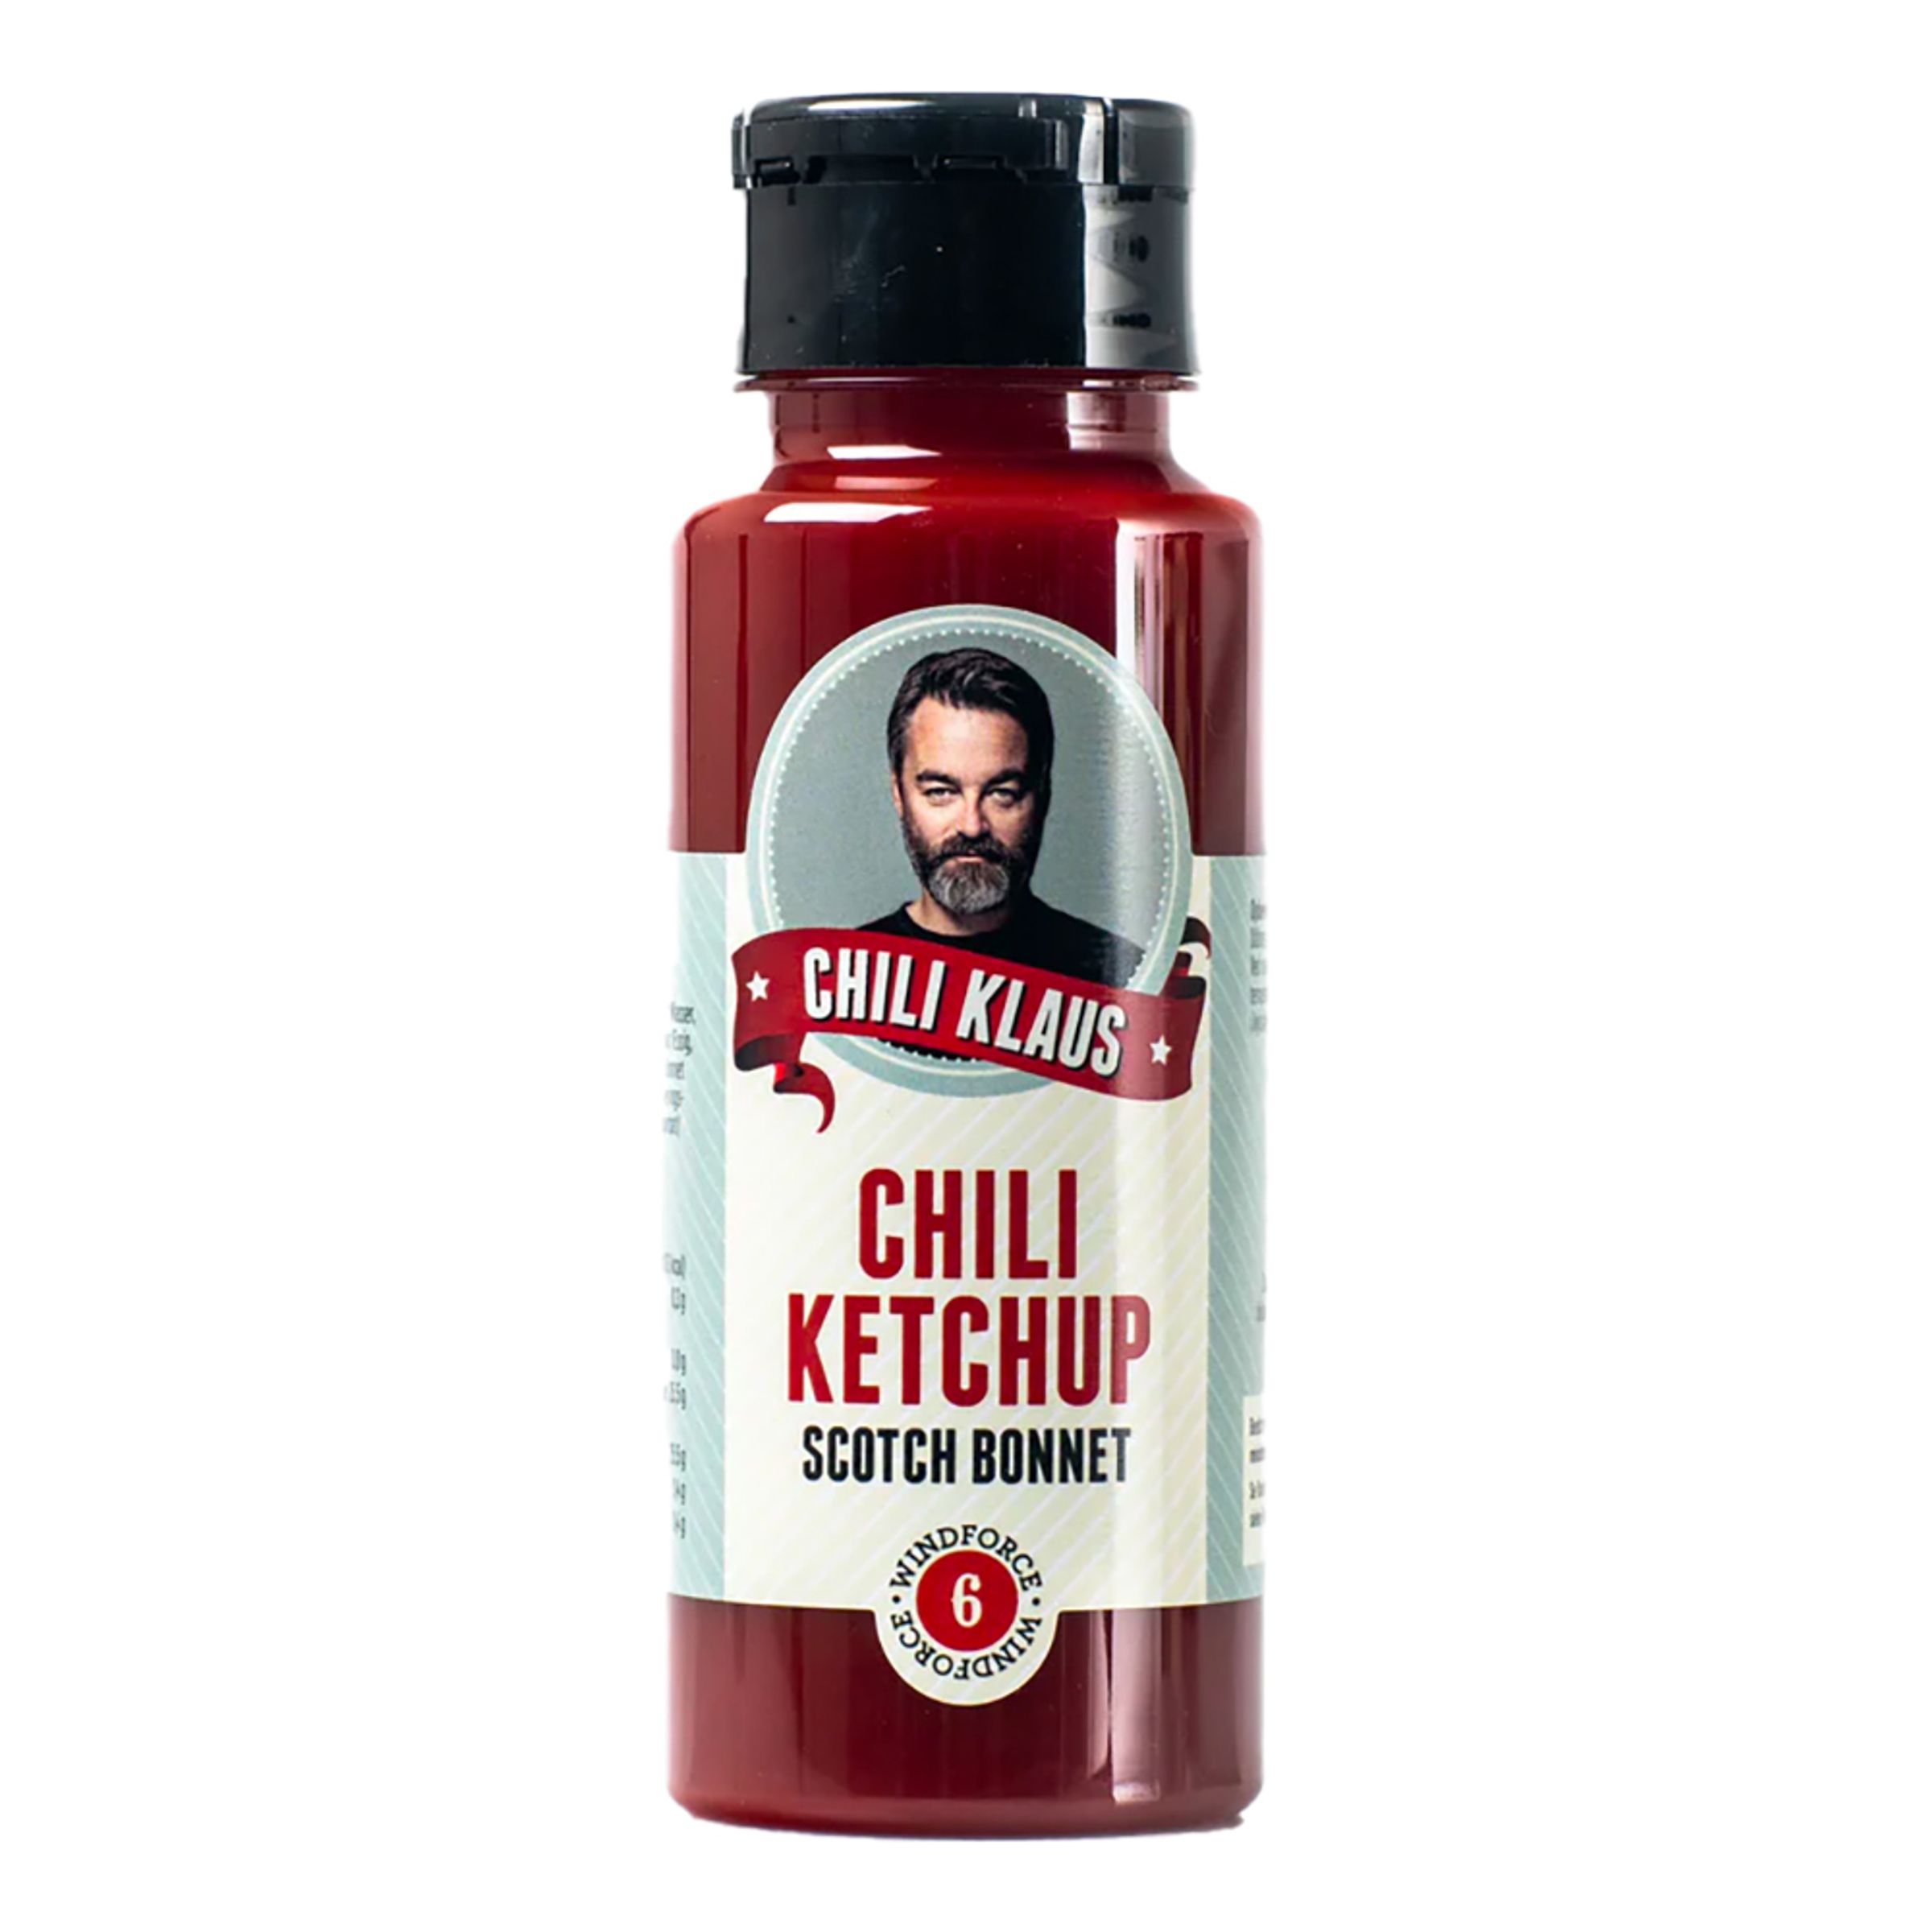 Chili Klaus Chili Ketchup Scotch Bonnet - 250 ml